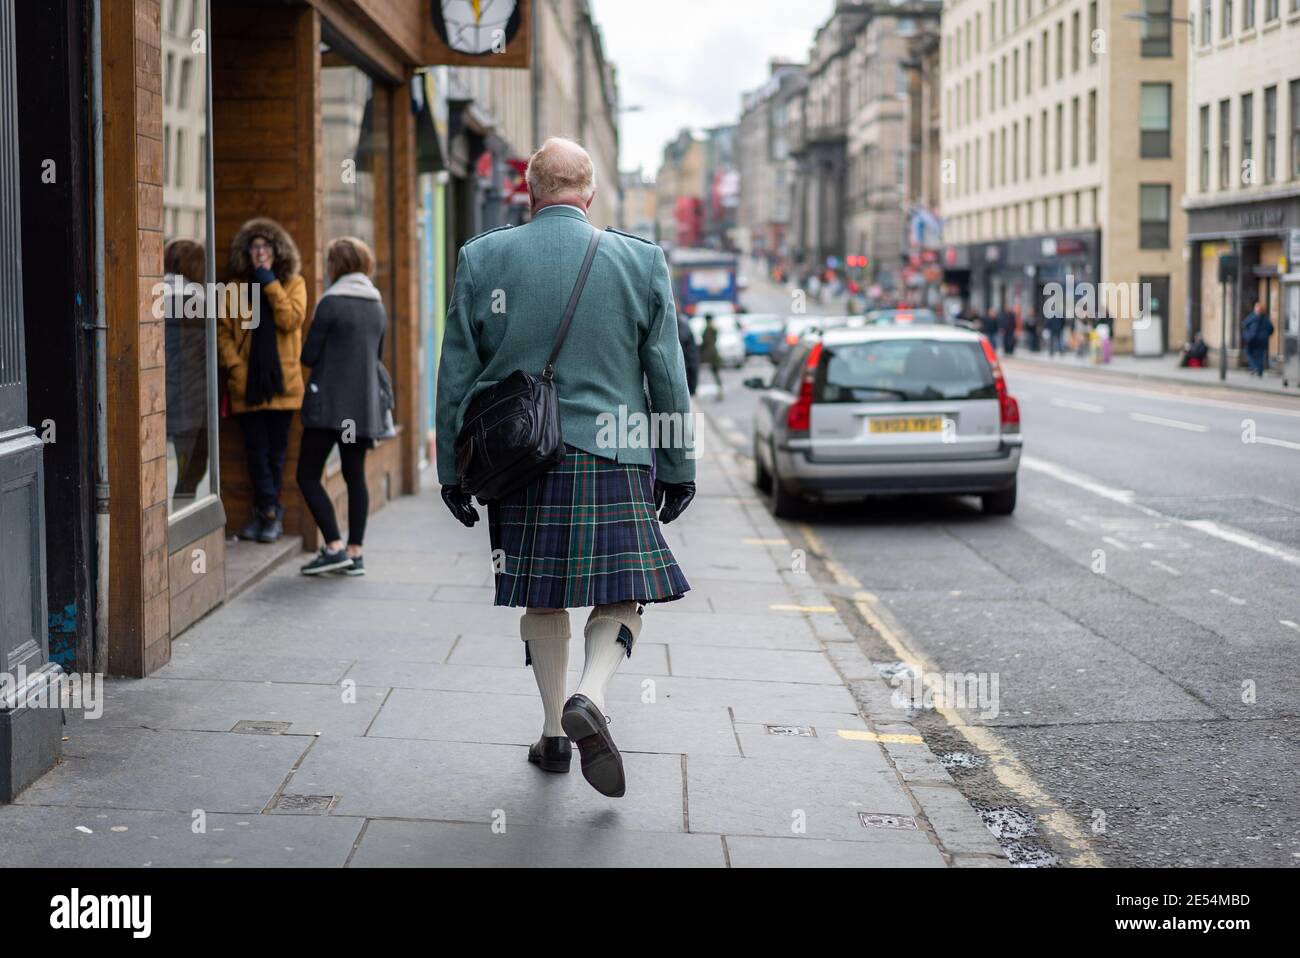 Edinburgh Scotland - October 2019 Scottish man walking along high street in tartan kilt with bag and green jacket through city centre from behind look Stock Photo